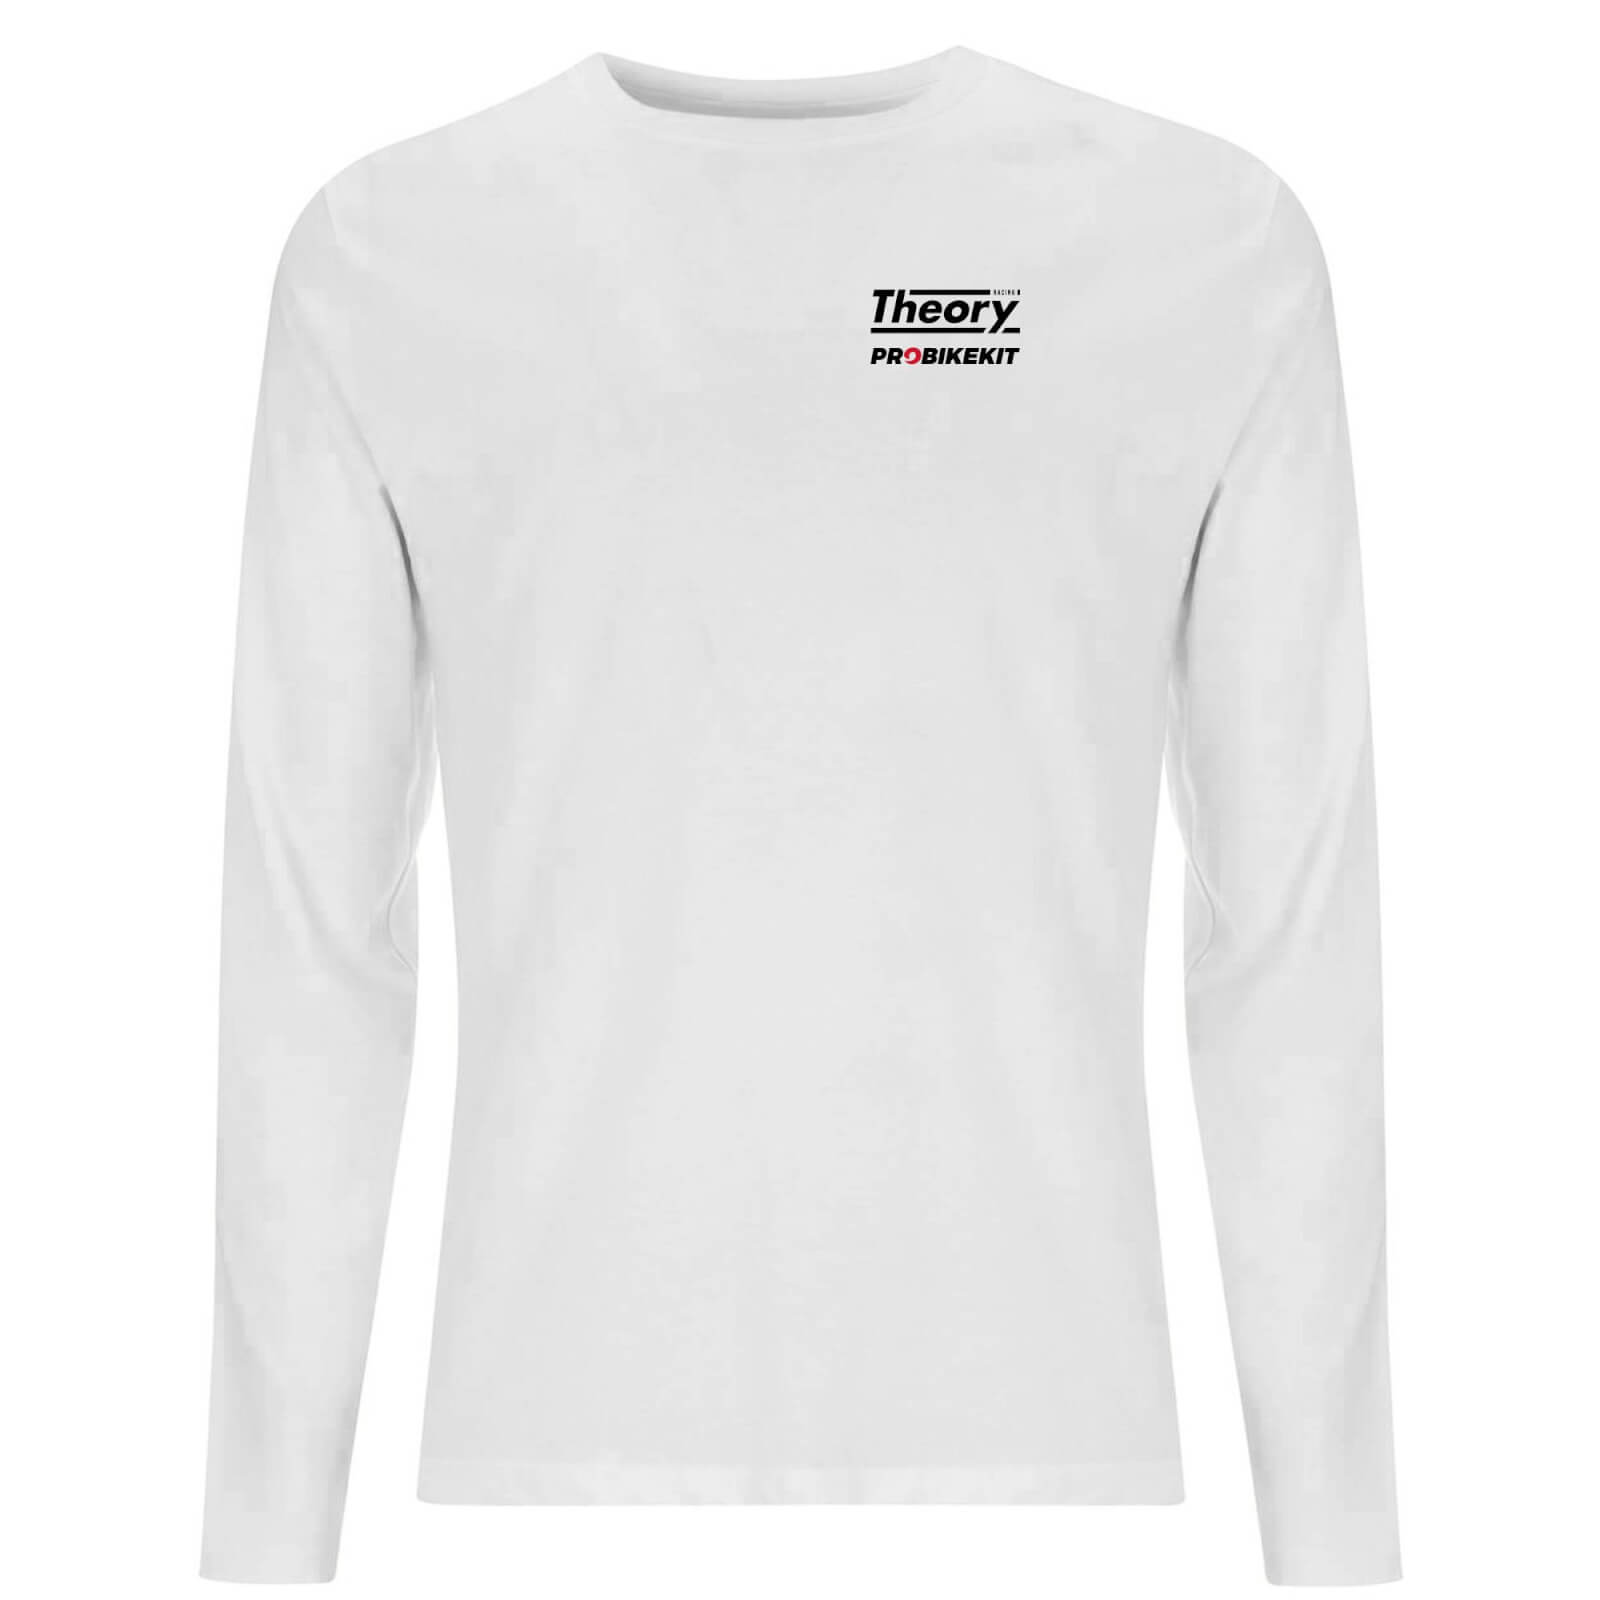 PBK Theory Logo Pocket Print Men's Long Sleeve T-Shirt - White - L - White